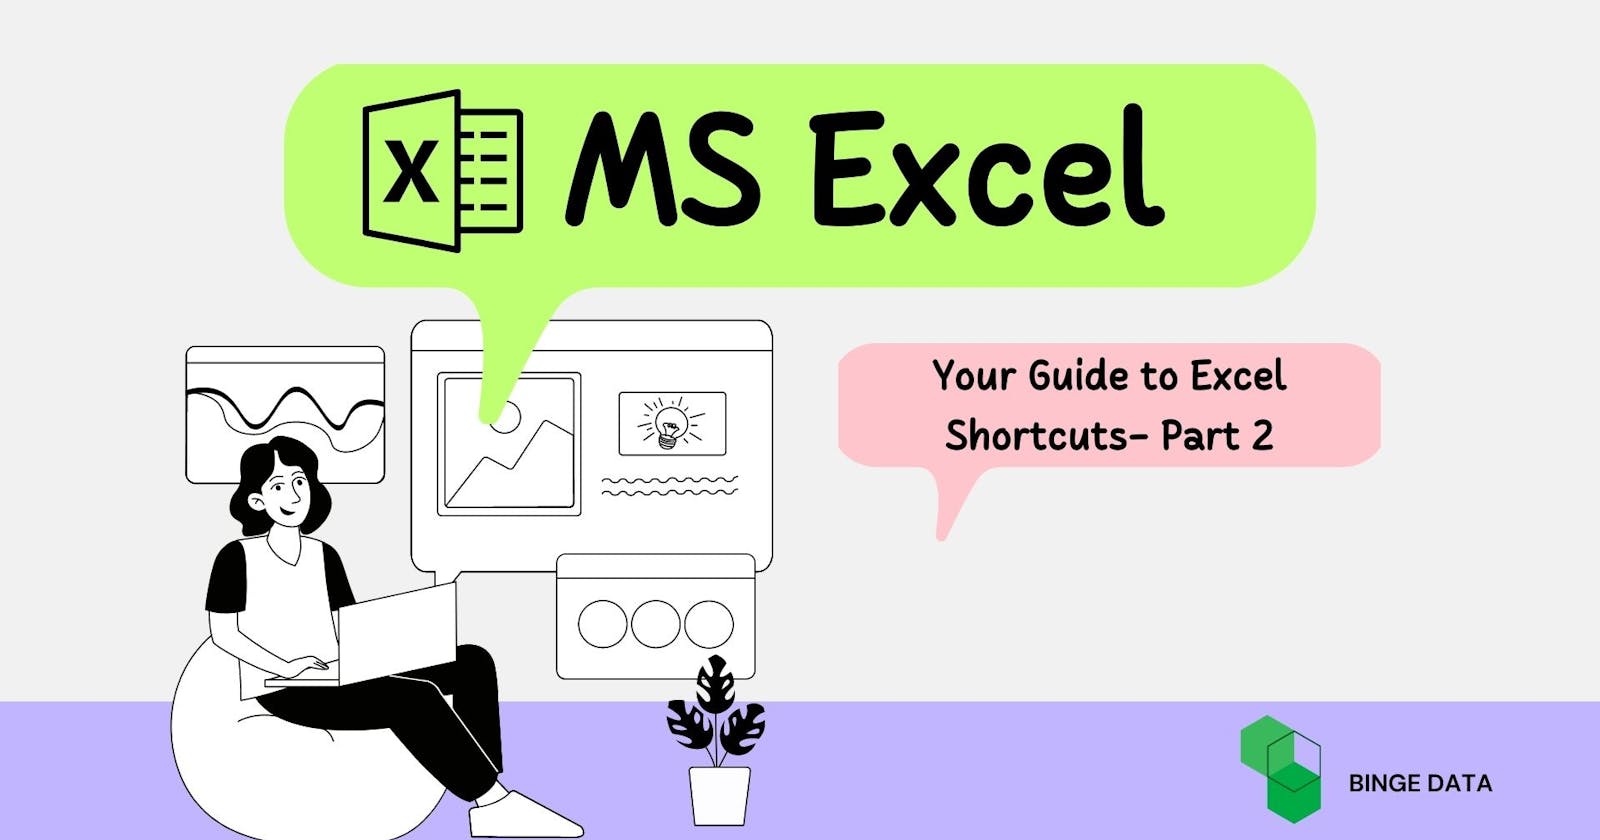 Mastering MS Excel